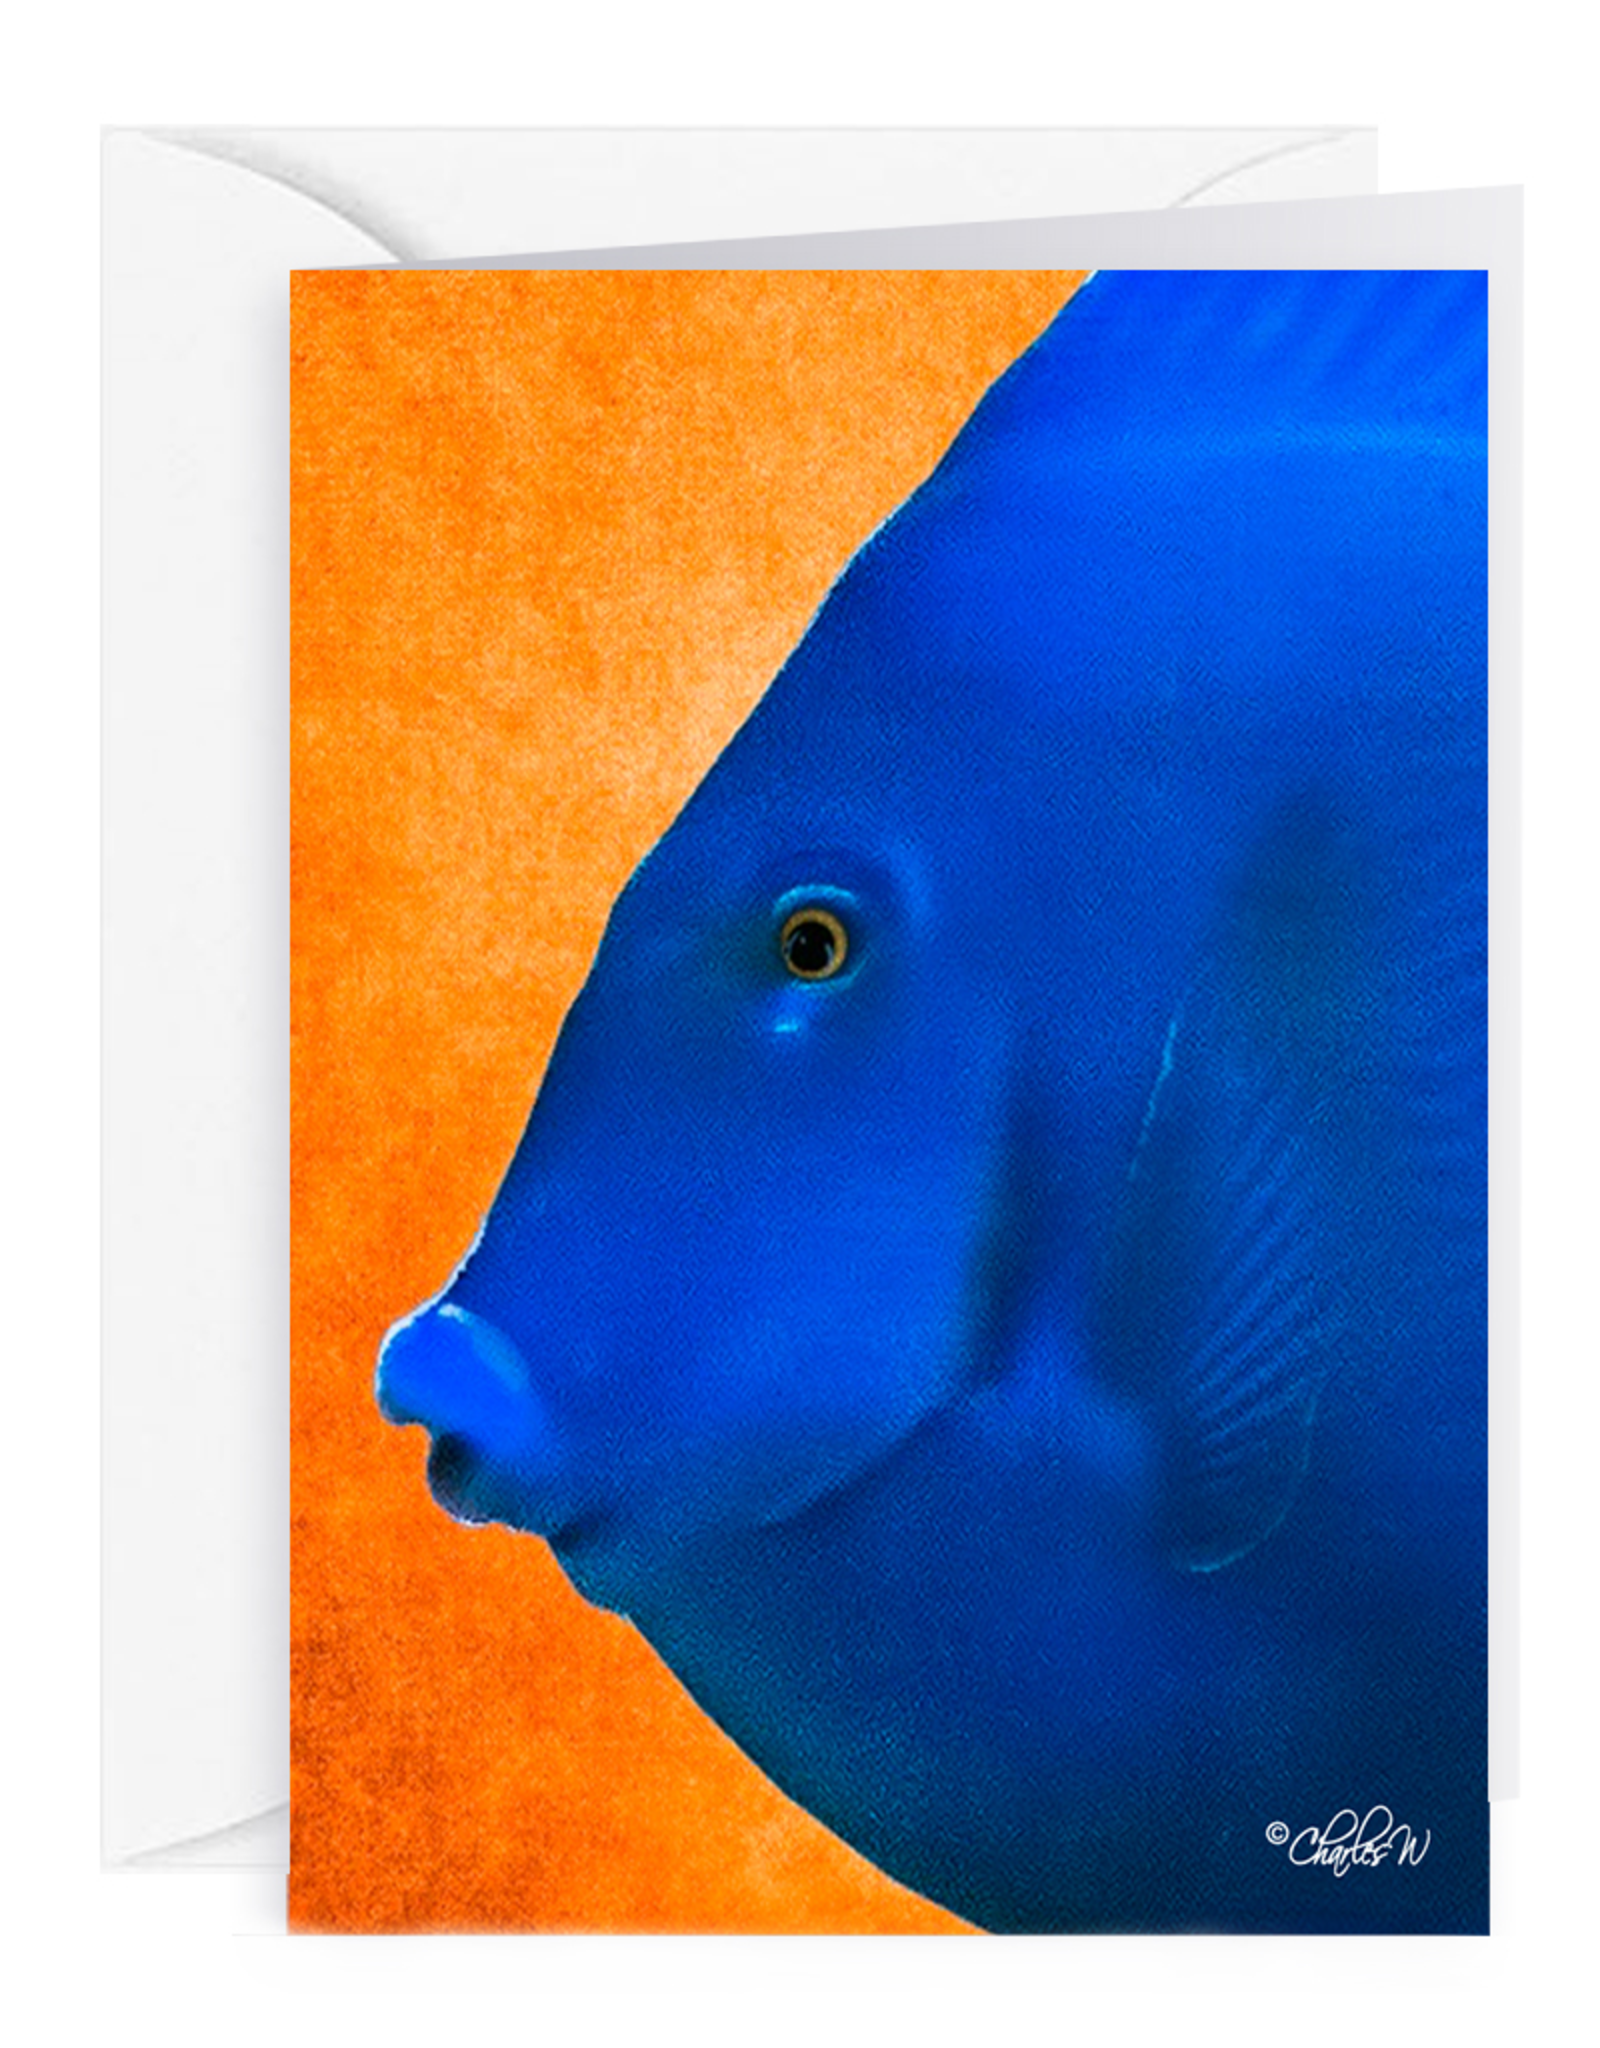 By The Seas-N Greetings Blank Note Card - Cash - Gift Card Holder - Blue Fish III